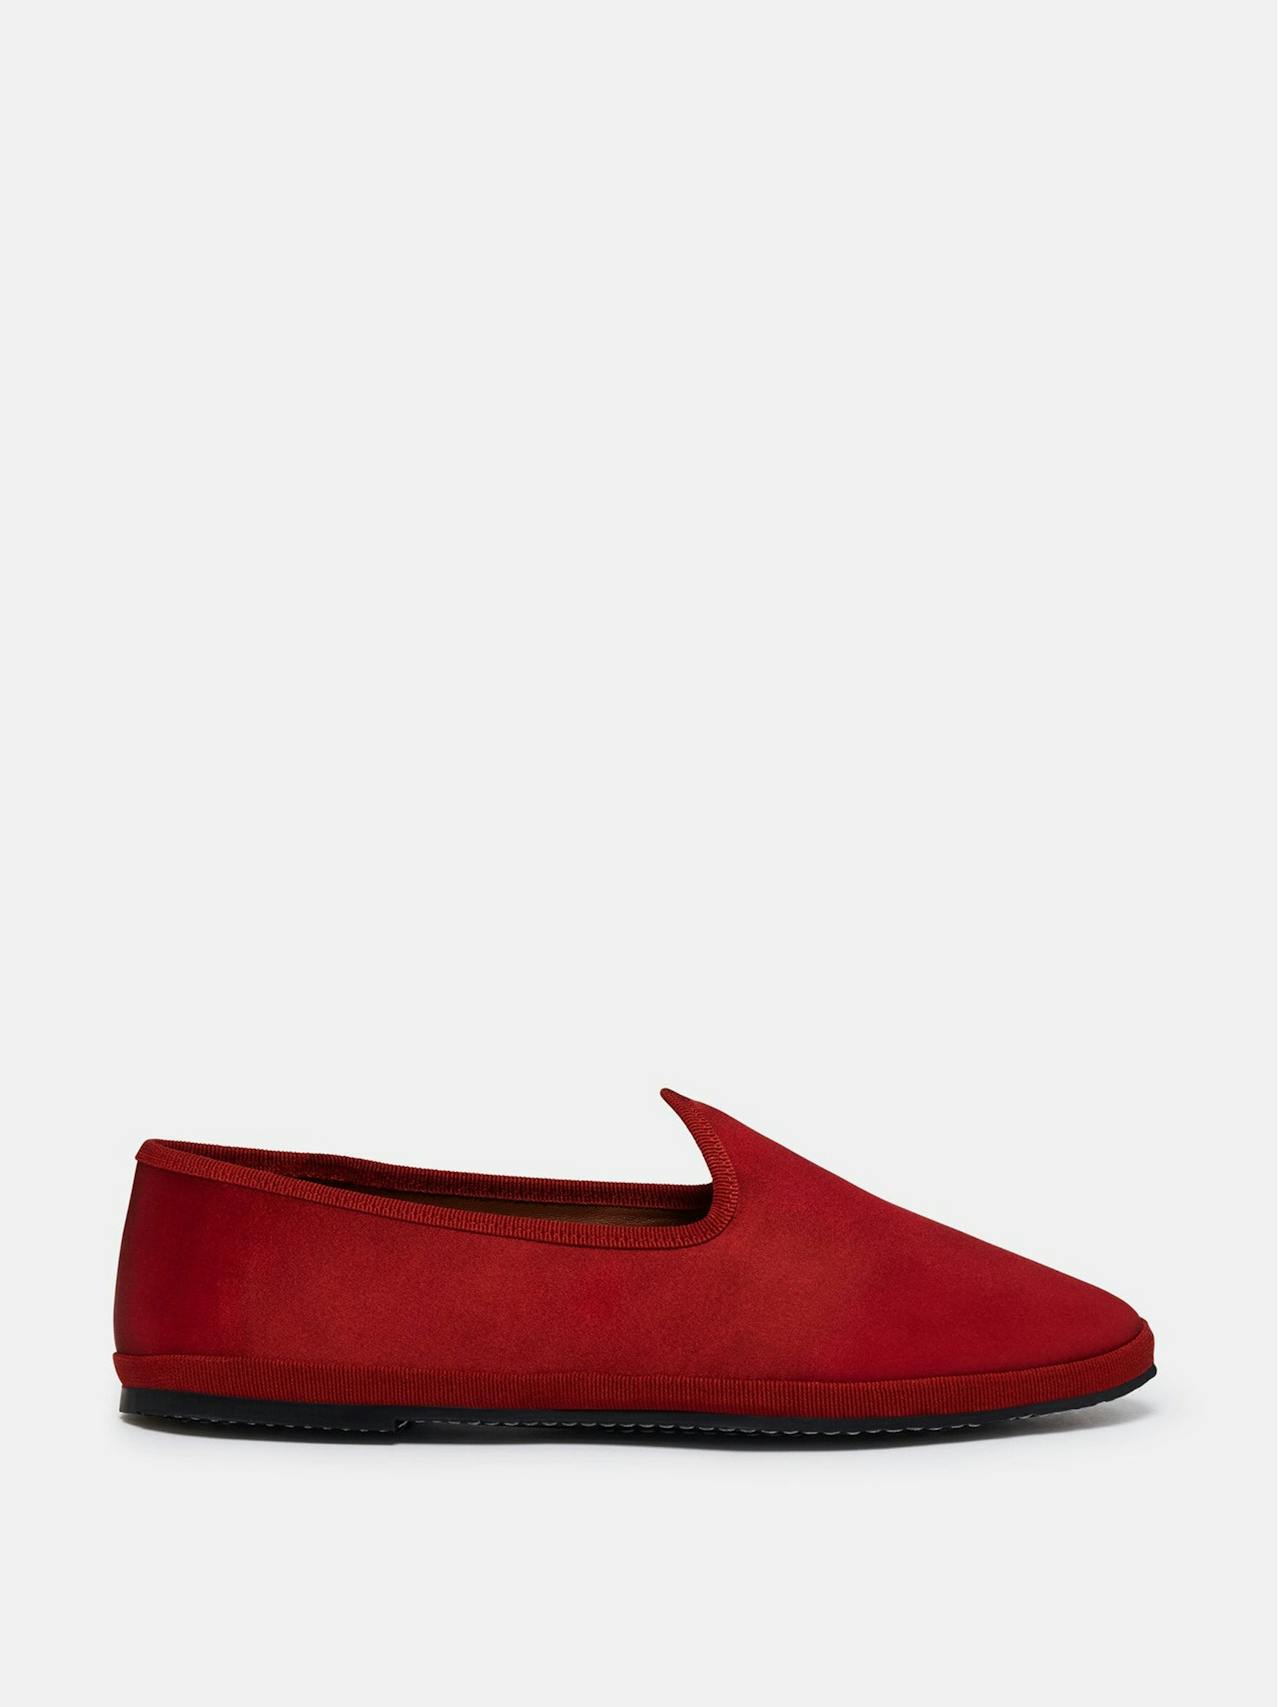 Scarlet red satin soft Venetian slippers